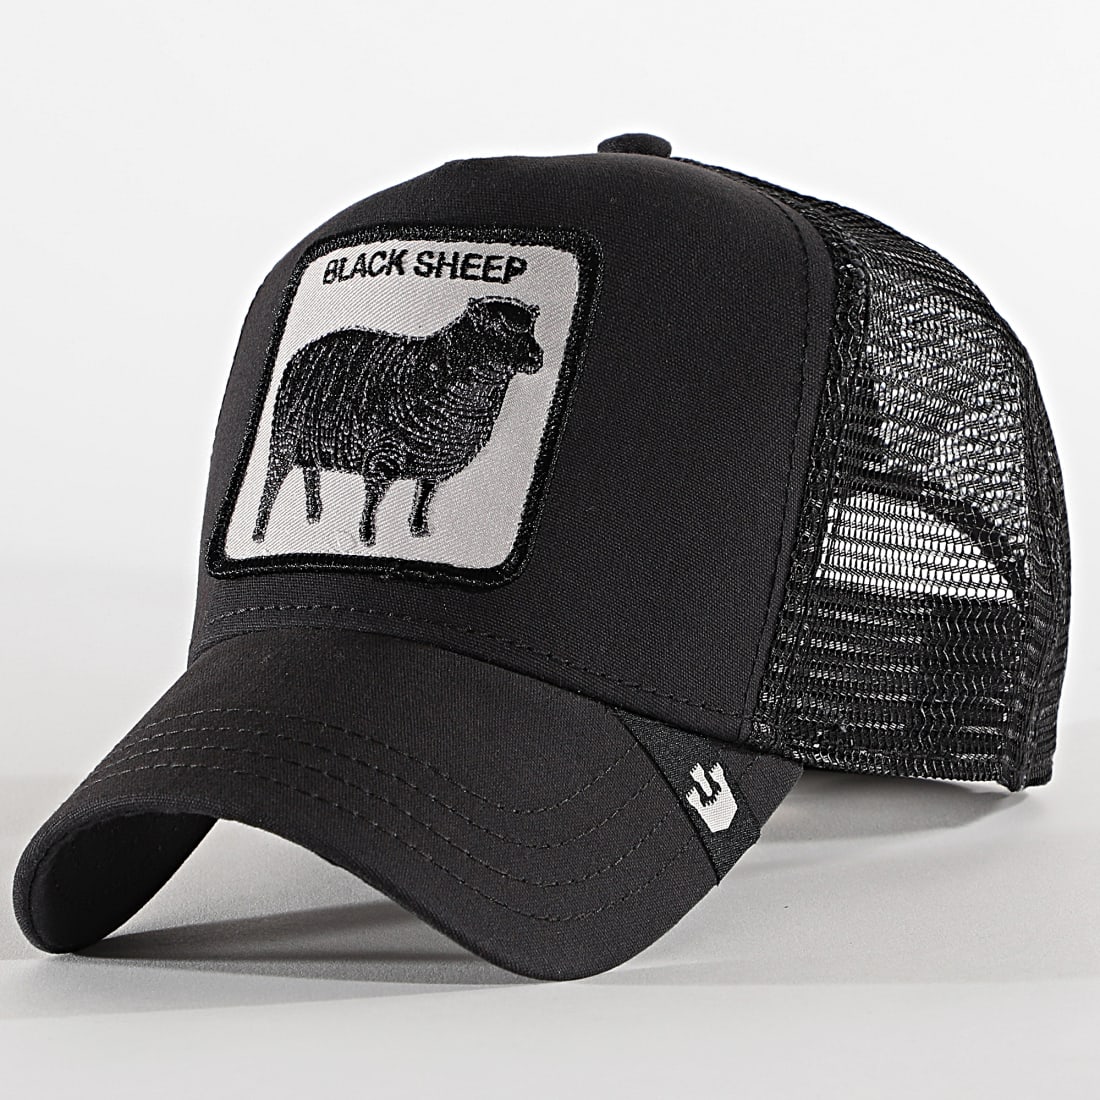 Goorin Bros - Casquette Trucker Black Sheep Noir - LaBoutiqueOfficielle.com